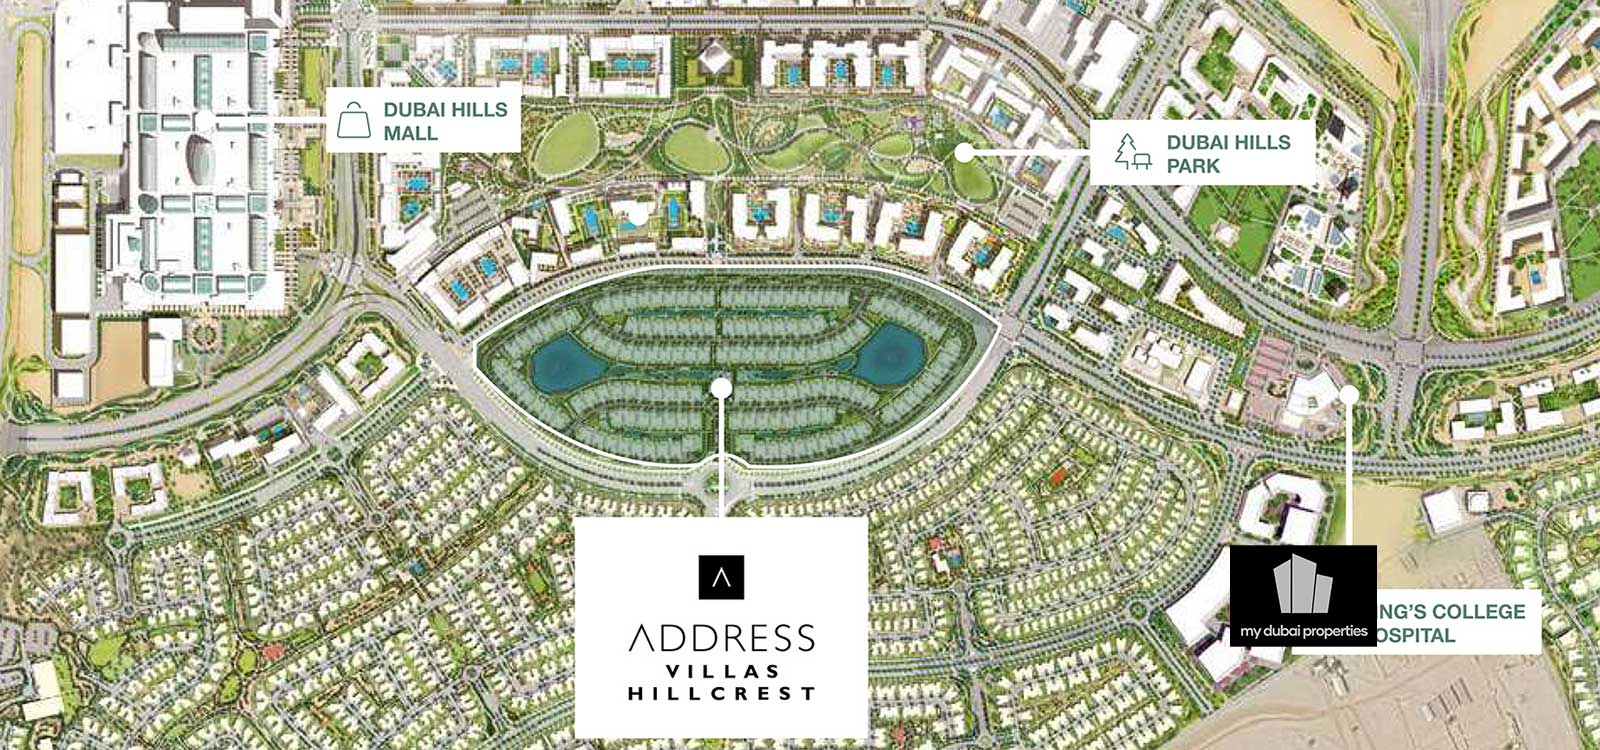 Address Hillcrest Villas Dubai Masterplan